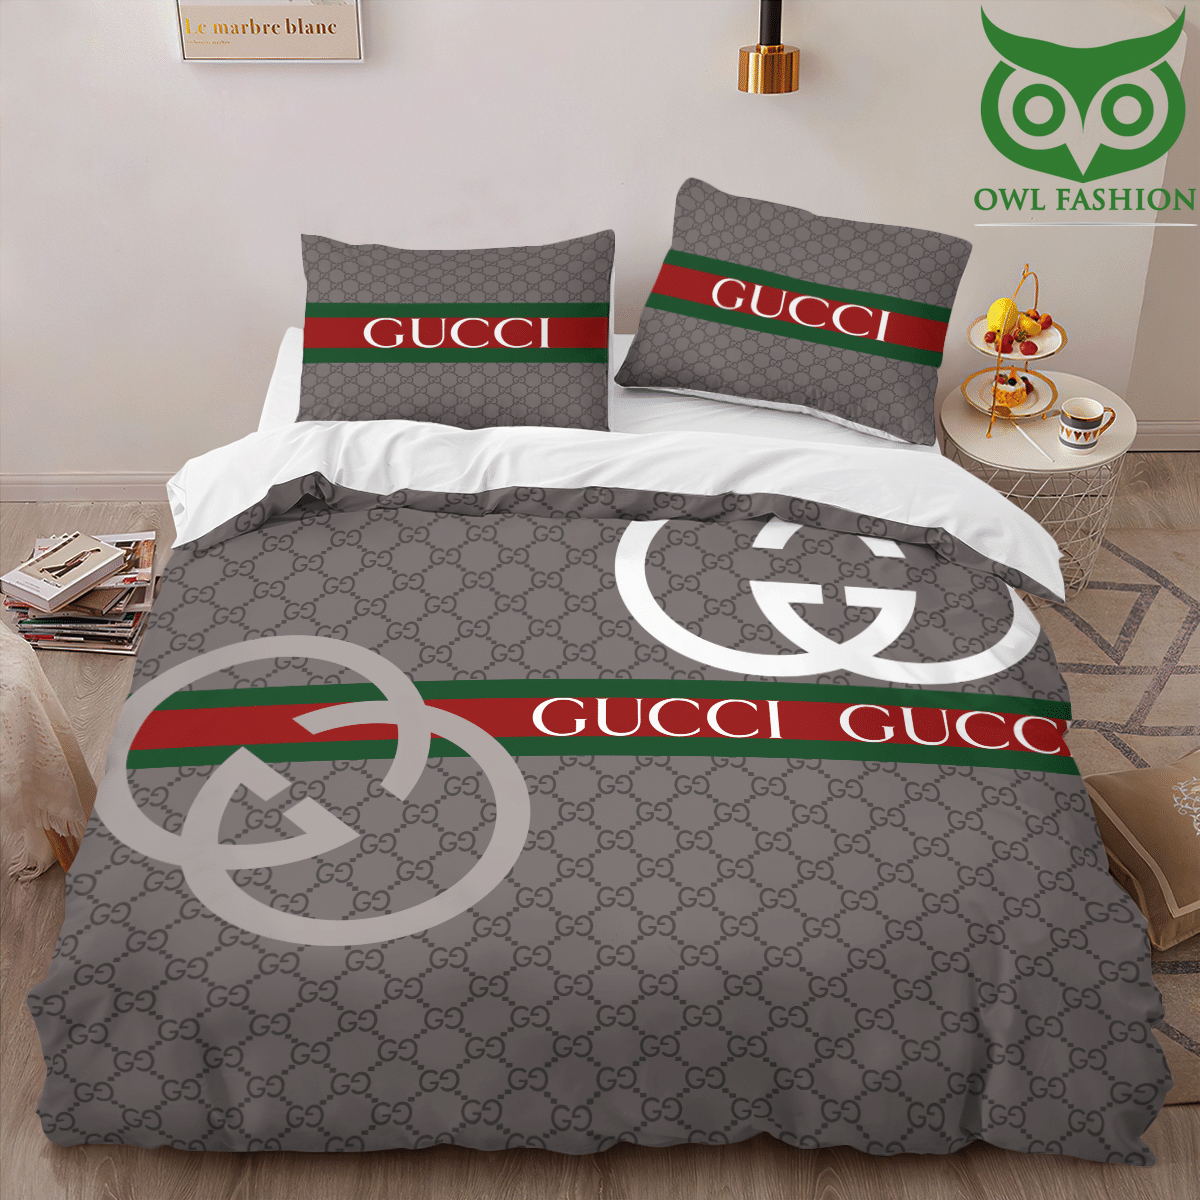 143 Gucci simple logo grey pattern bedding set